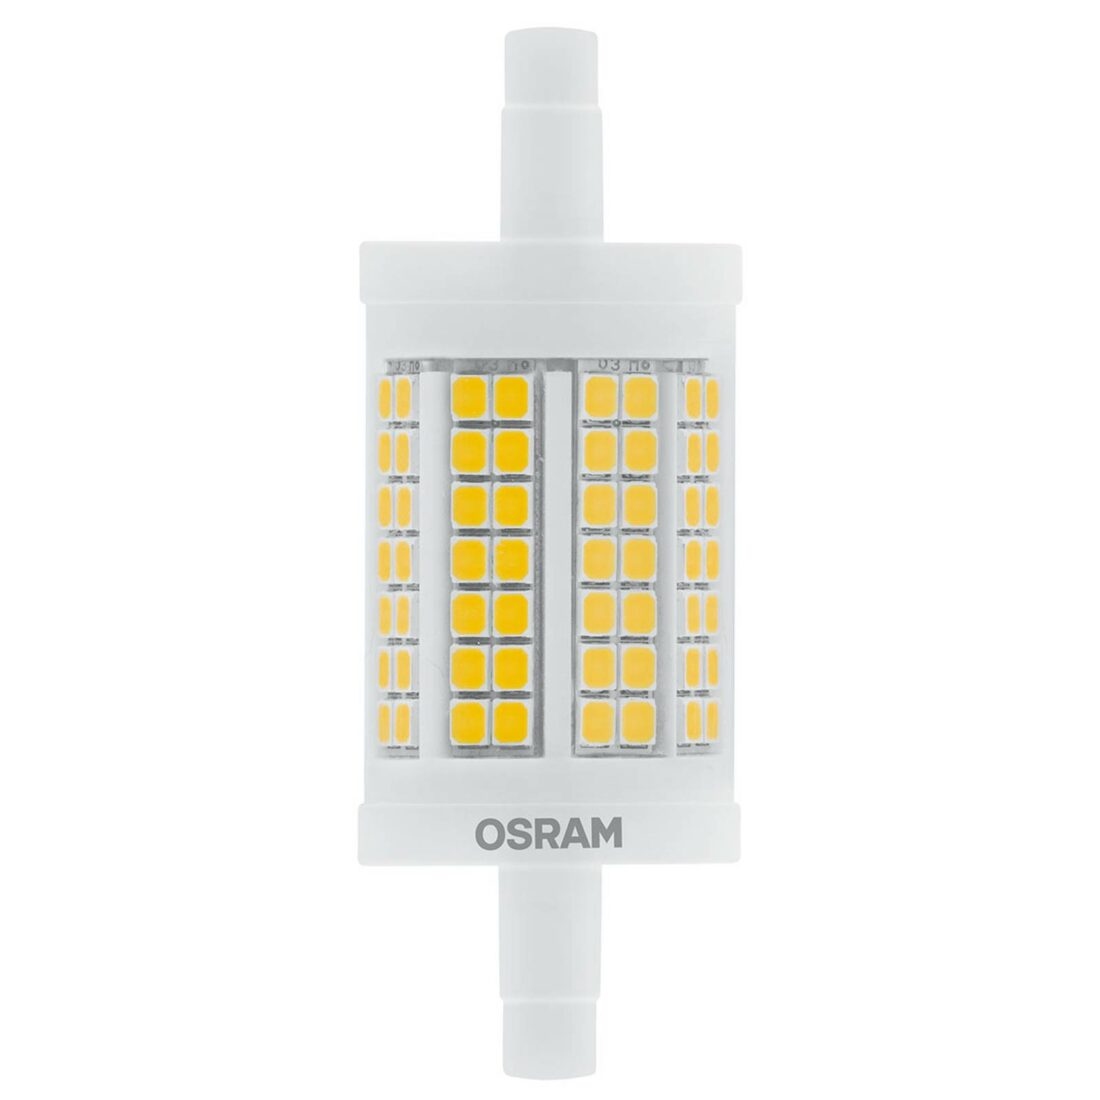 OSRAM LED tyč žárovka R7s 12W 7